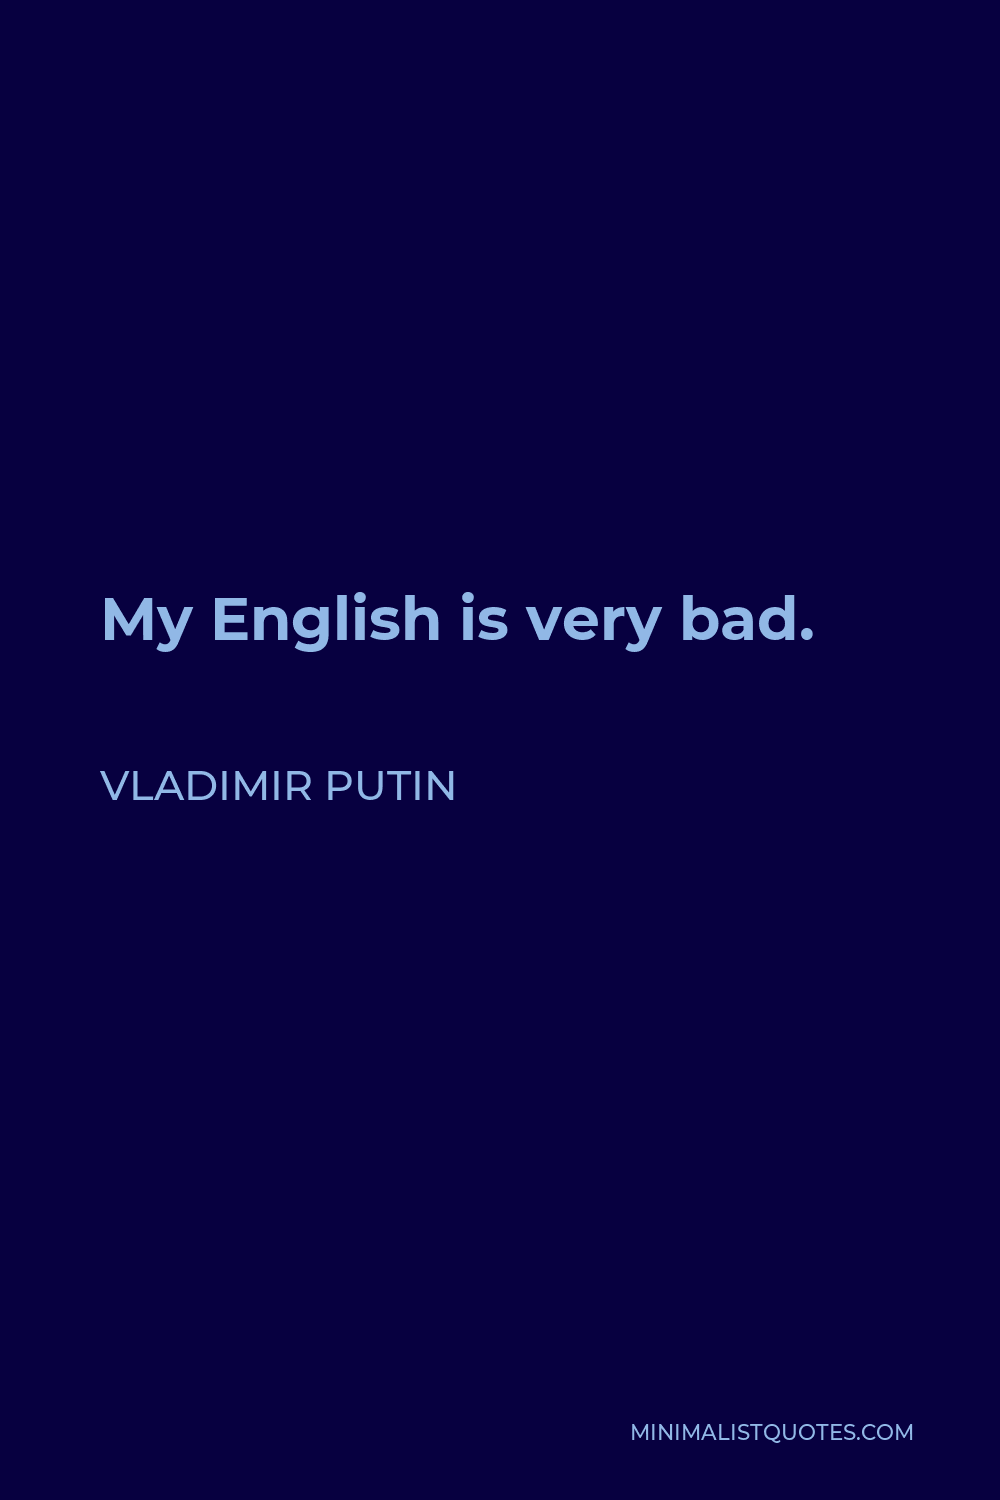 Vladimir Putin Quote - My English is very bad.